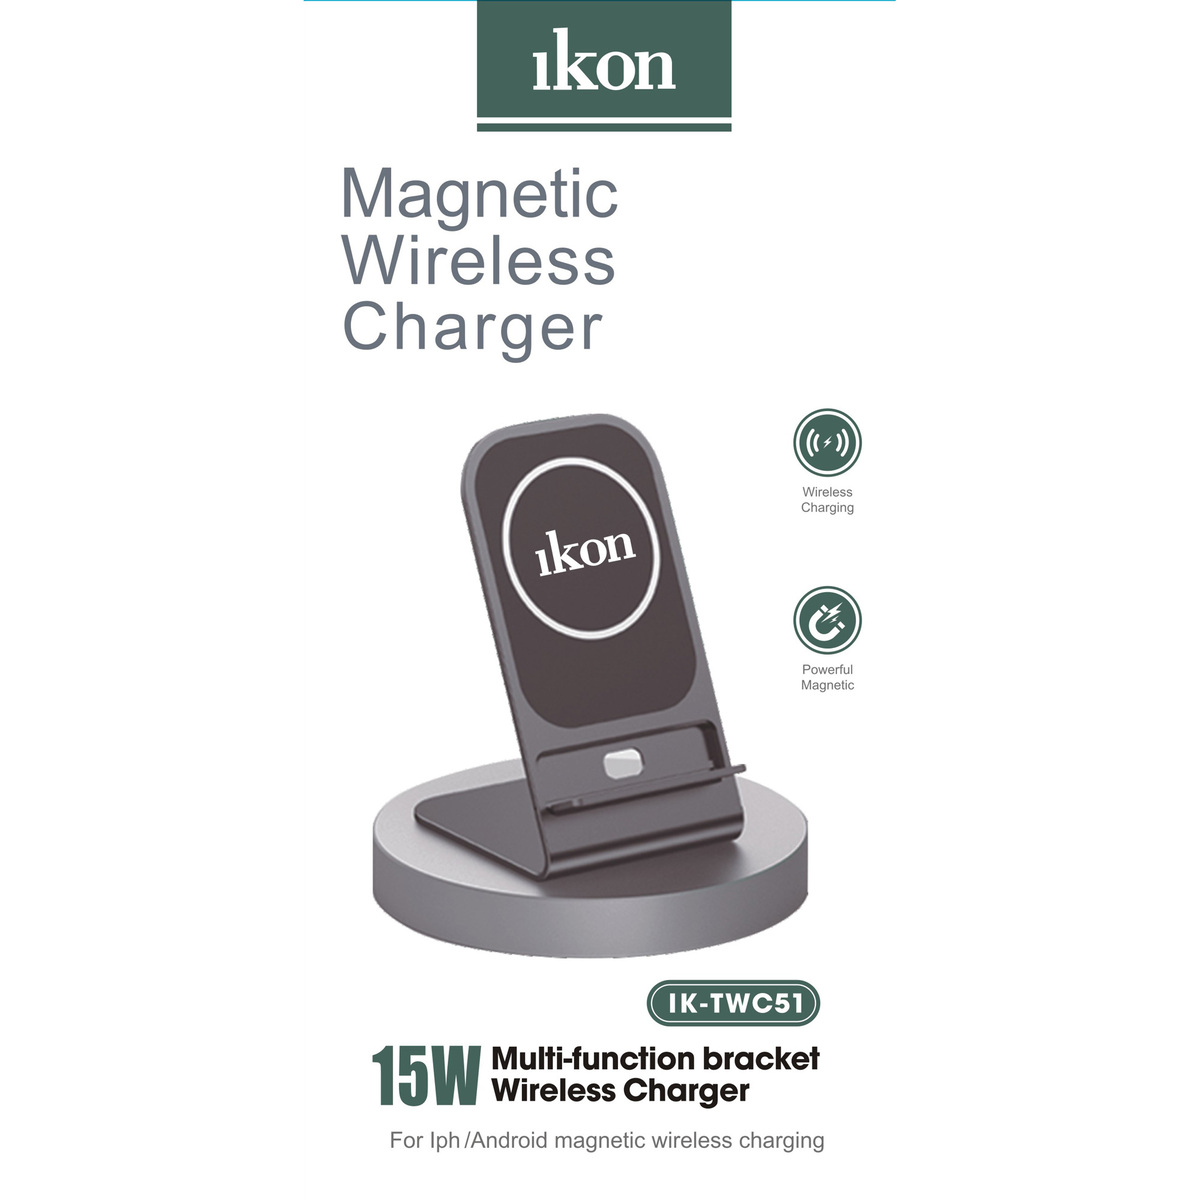 Ikon Magnetic Wireless Charger, IK-TWC51